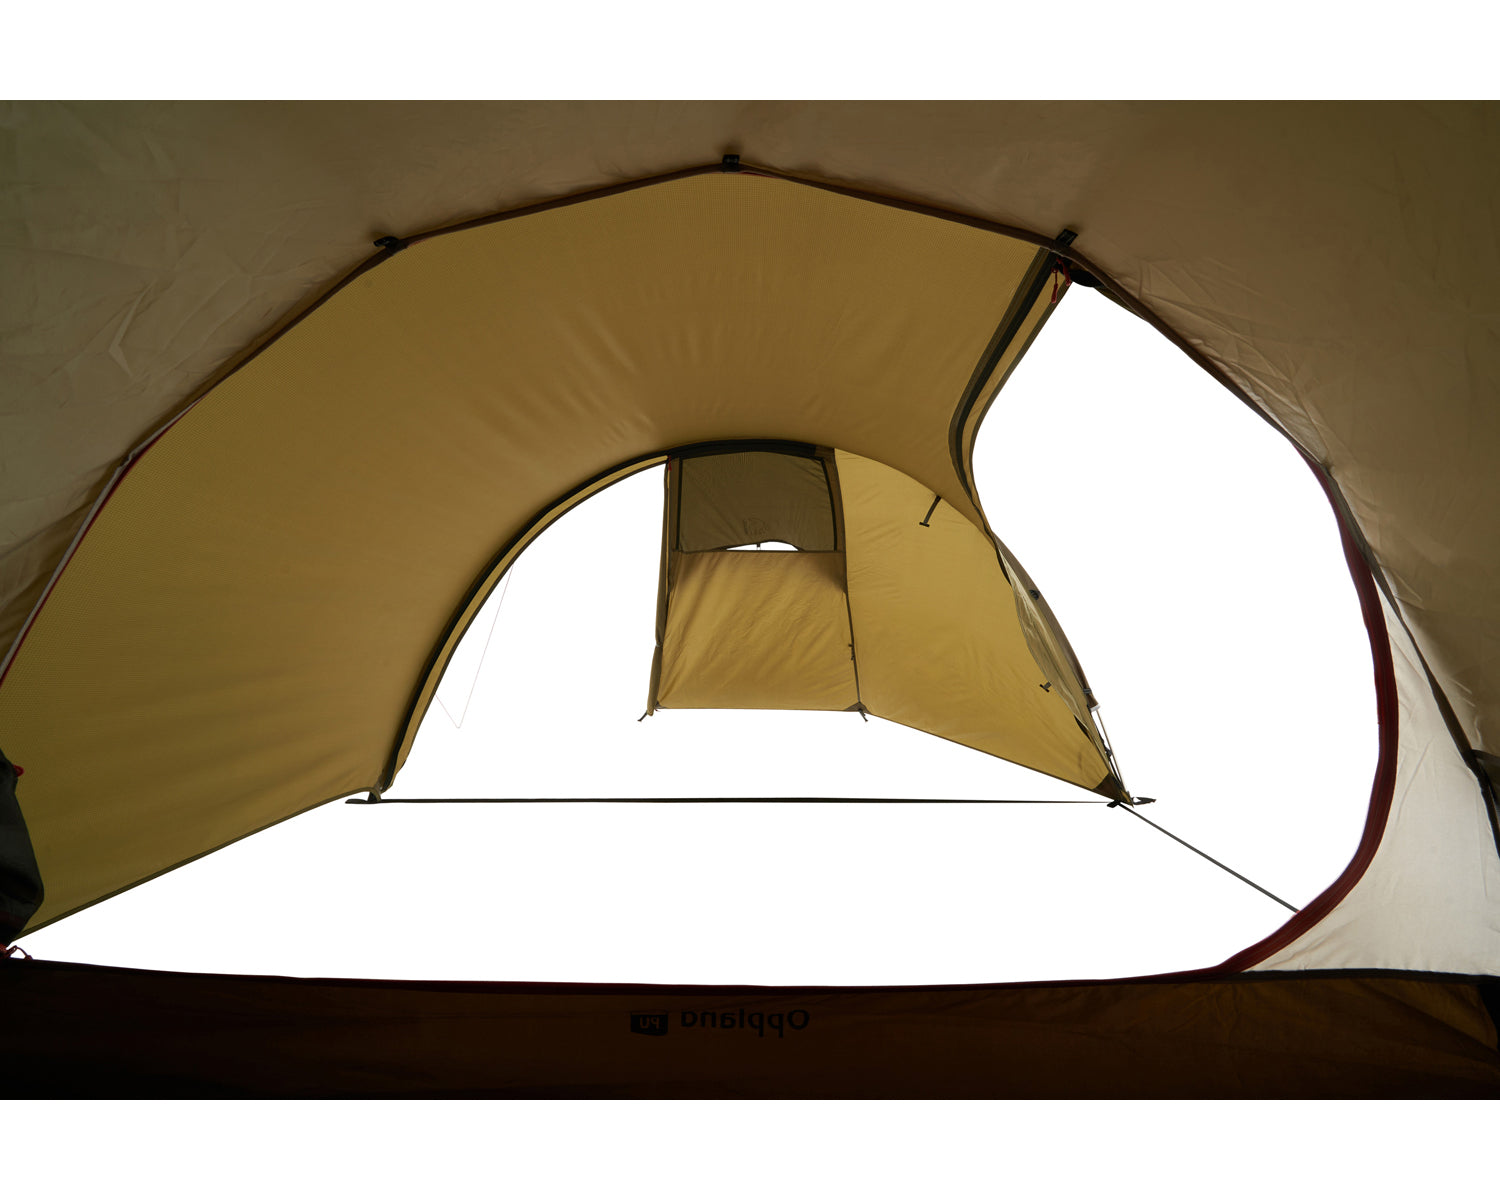 Oppland 3 PU (3.0) tent - Dark Olive